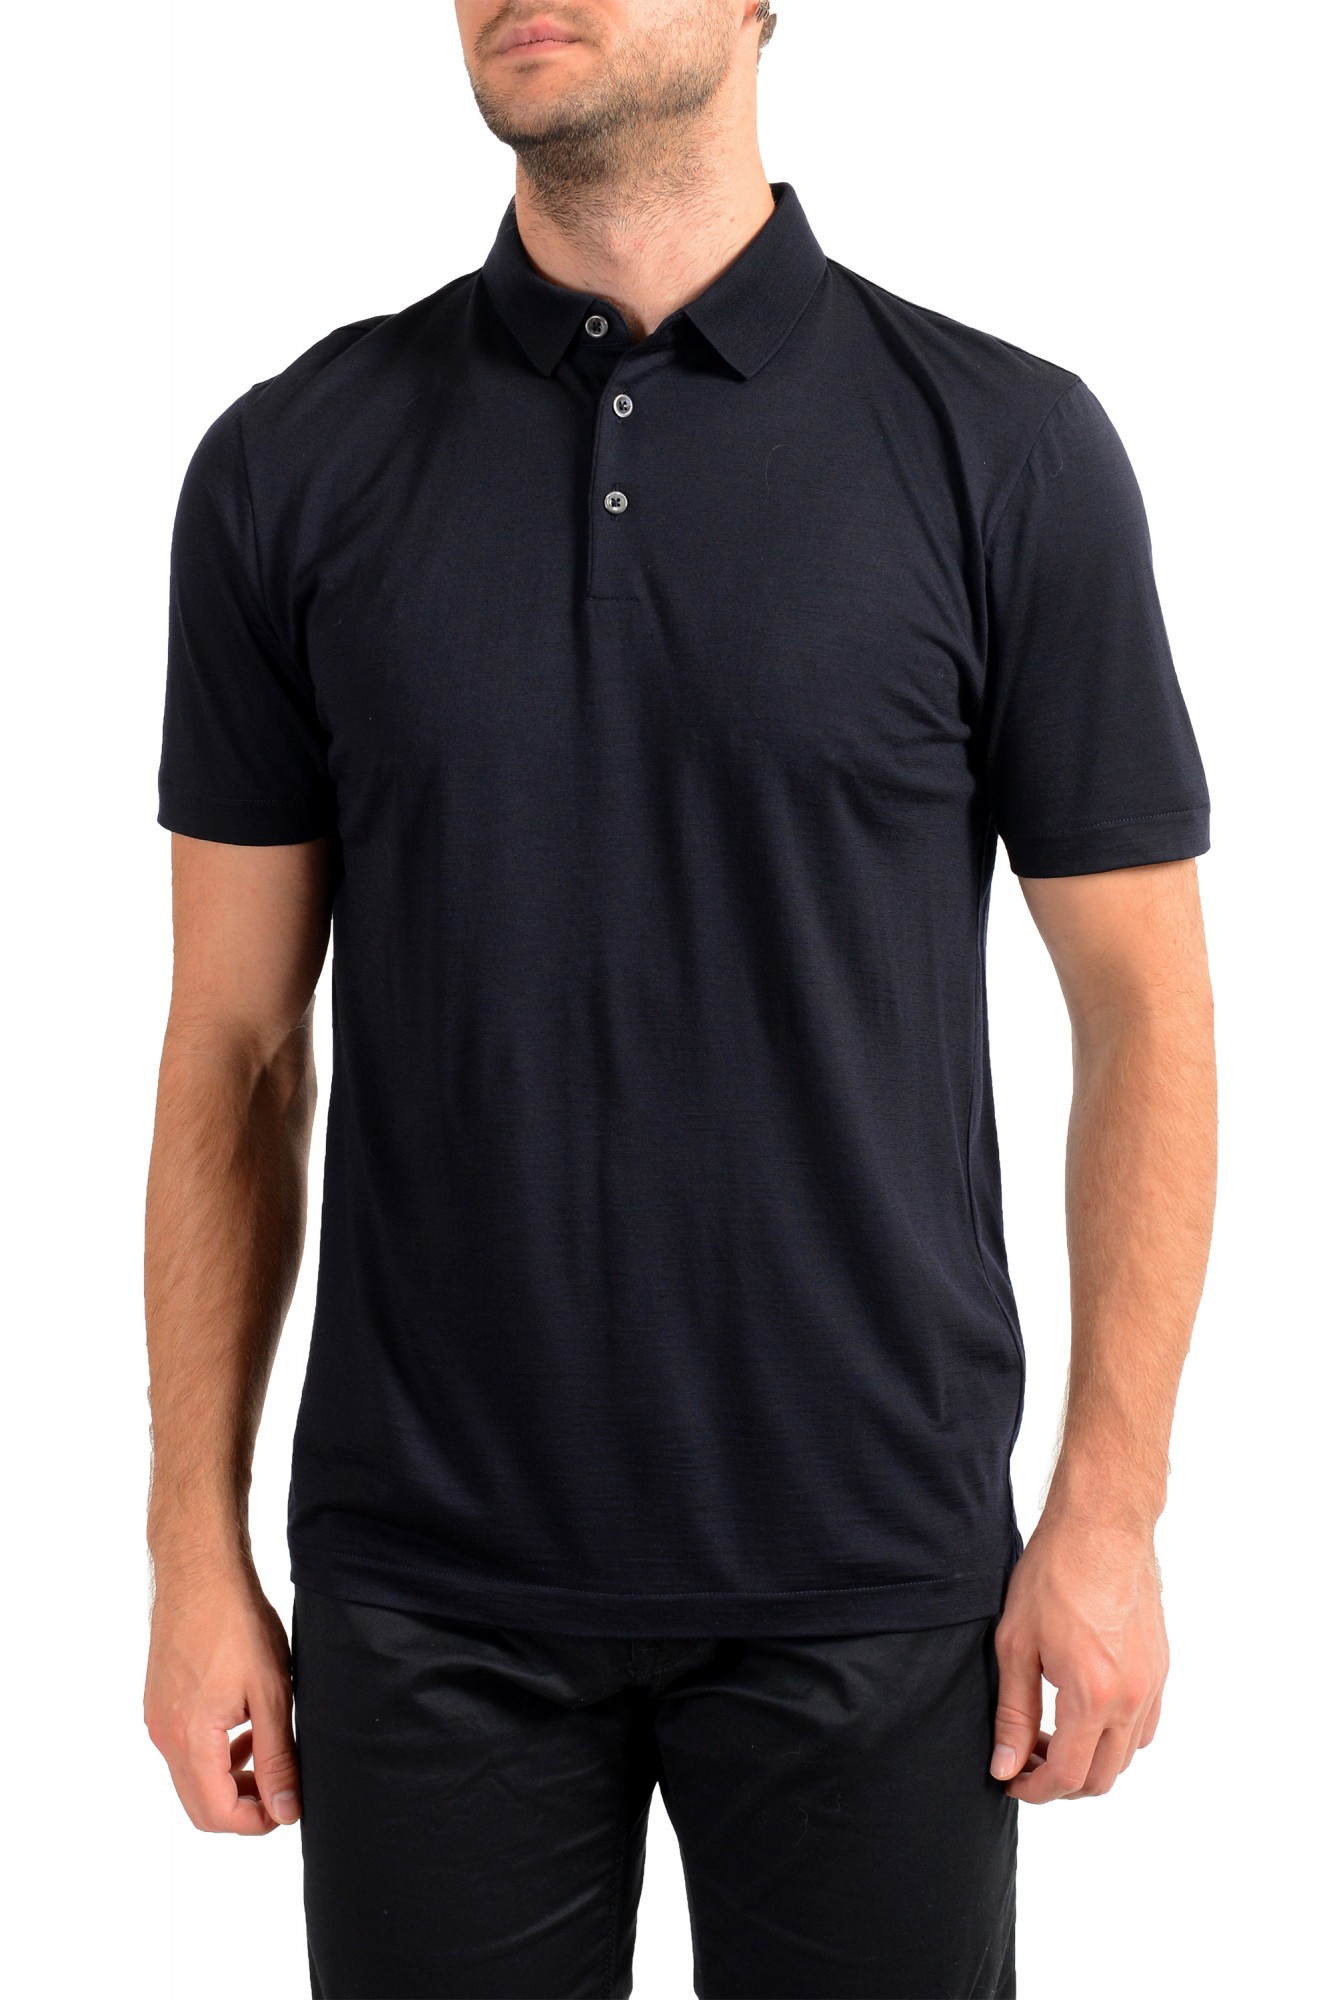 acceptere kindben afbrudt Hugo Boss Men's "Press 47" Black 100% Wool Short Sleeve Polo Shirt